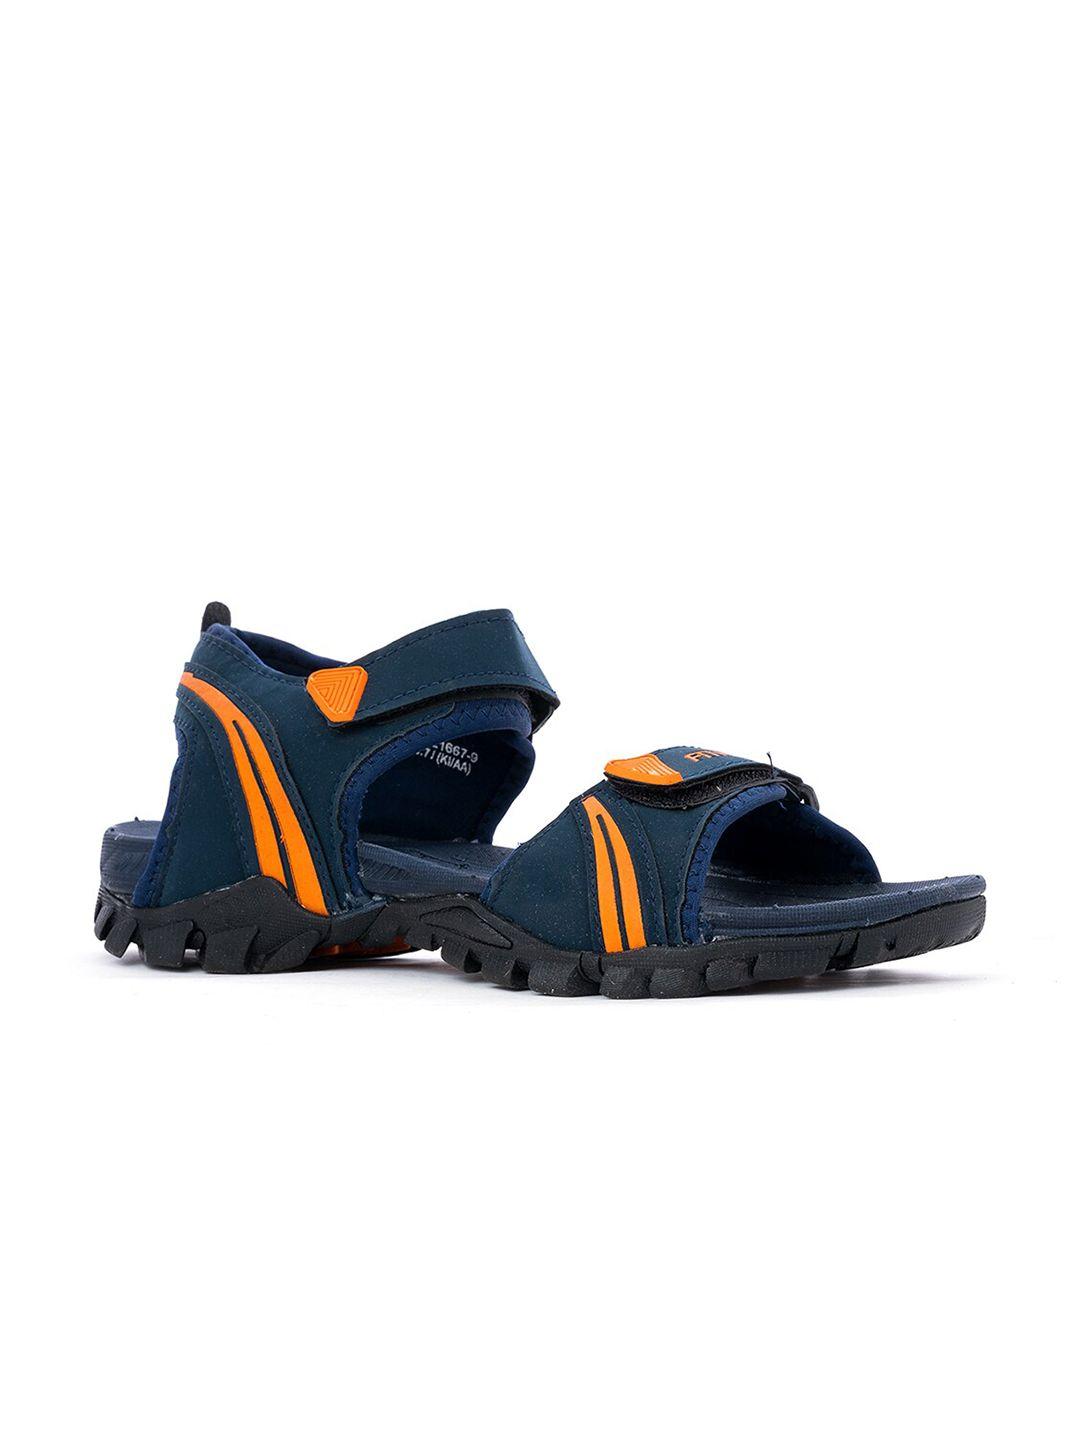 khadims men navy blue & orange comfort sandals